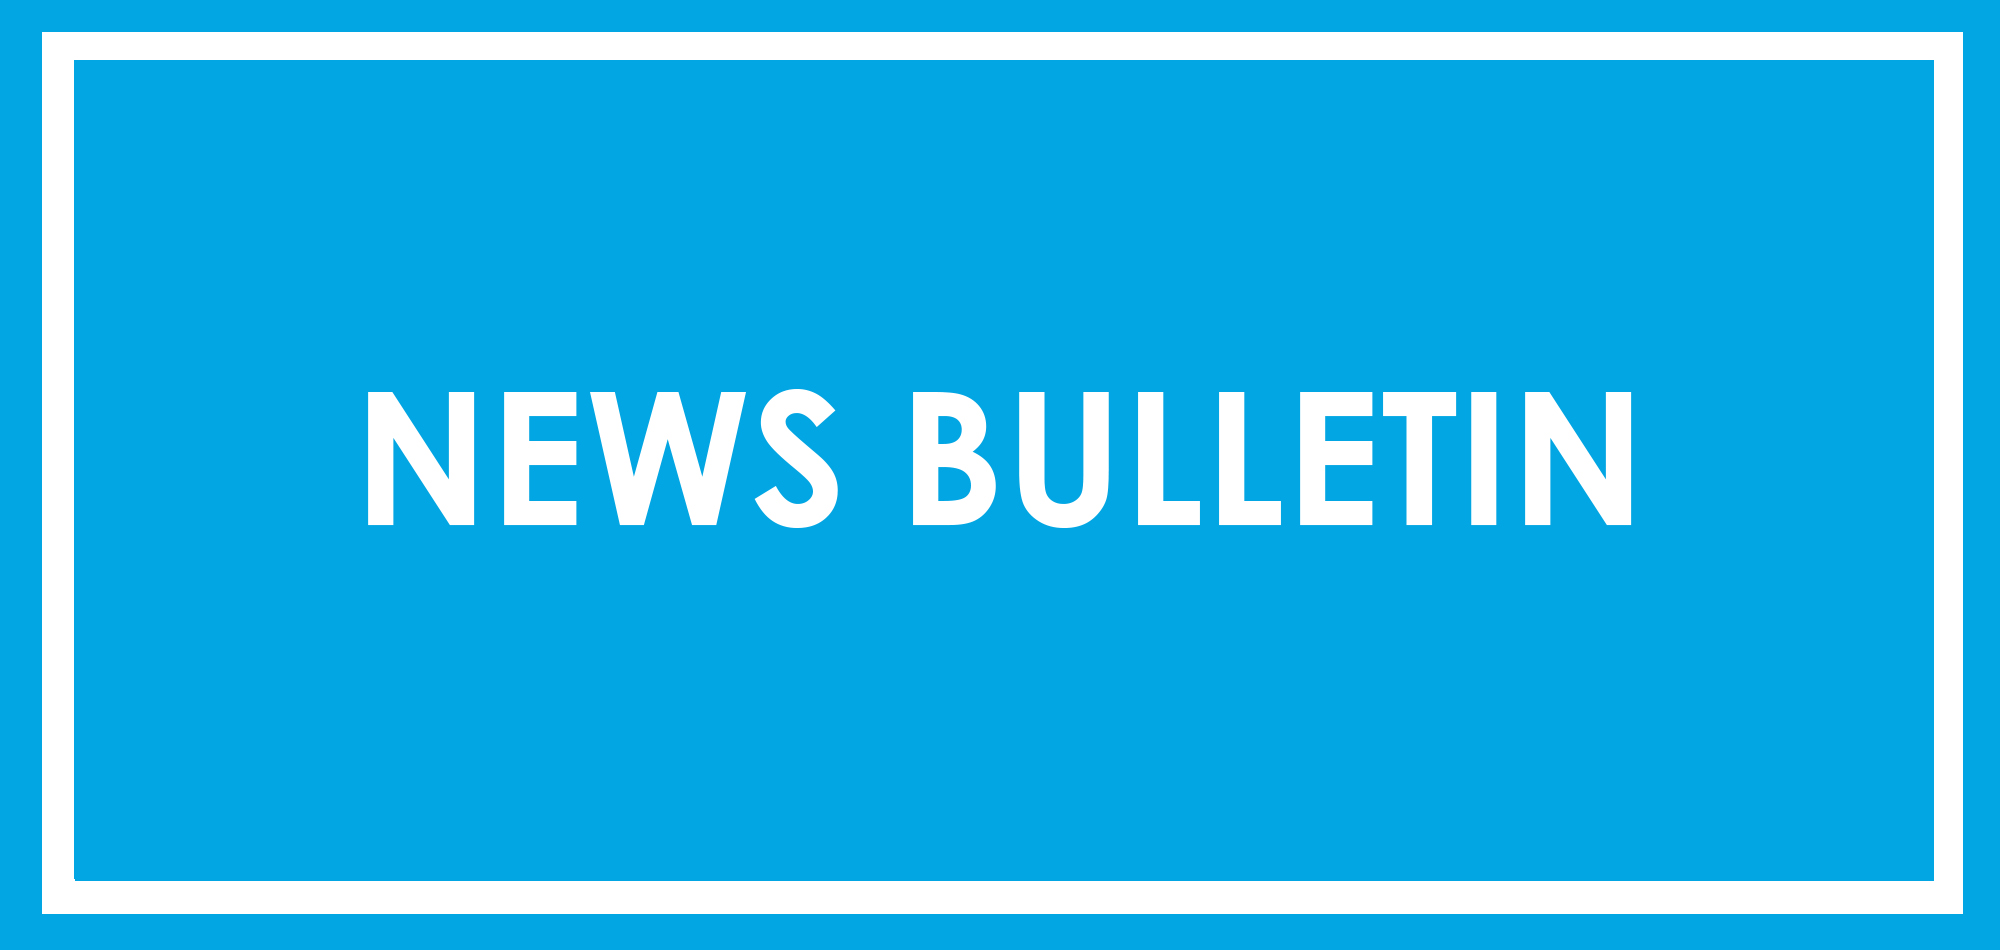 News Bulletin - 03.08.21